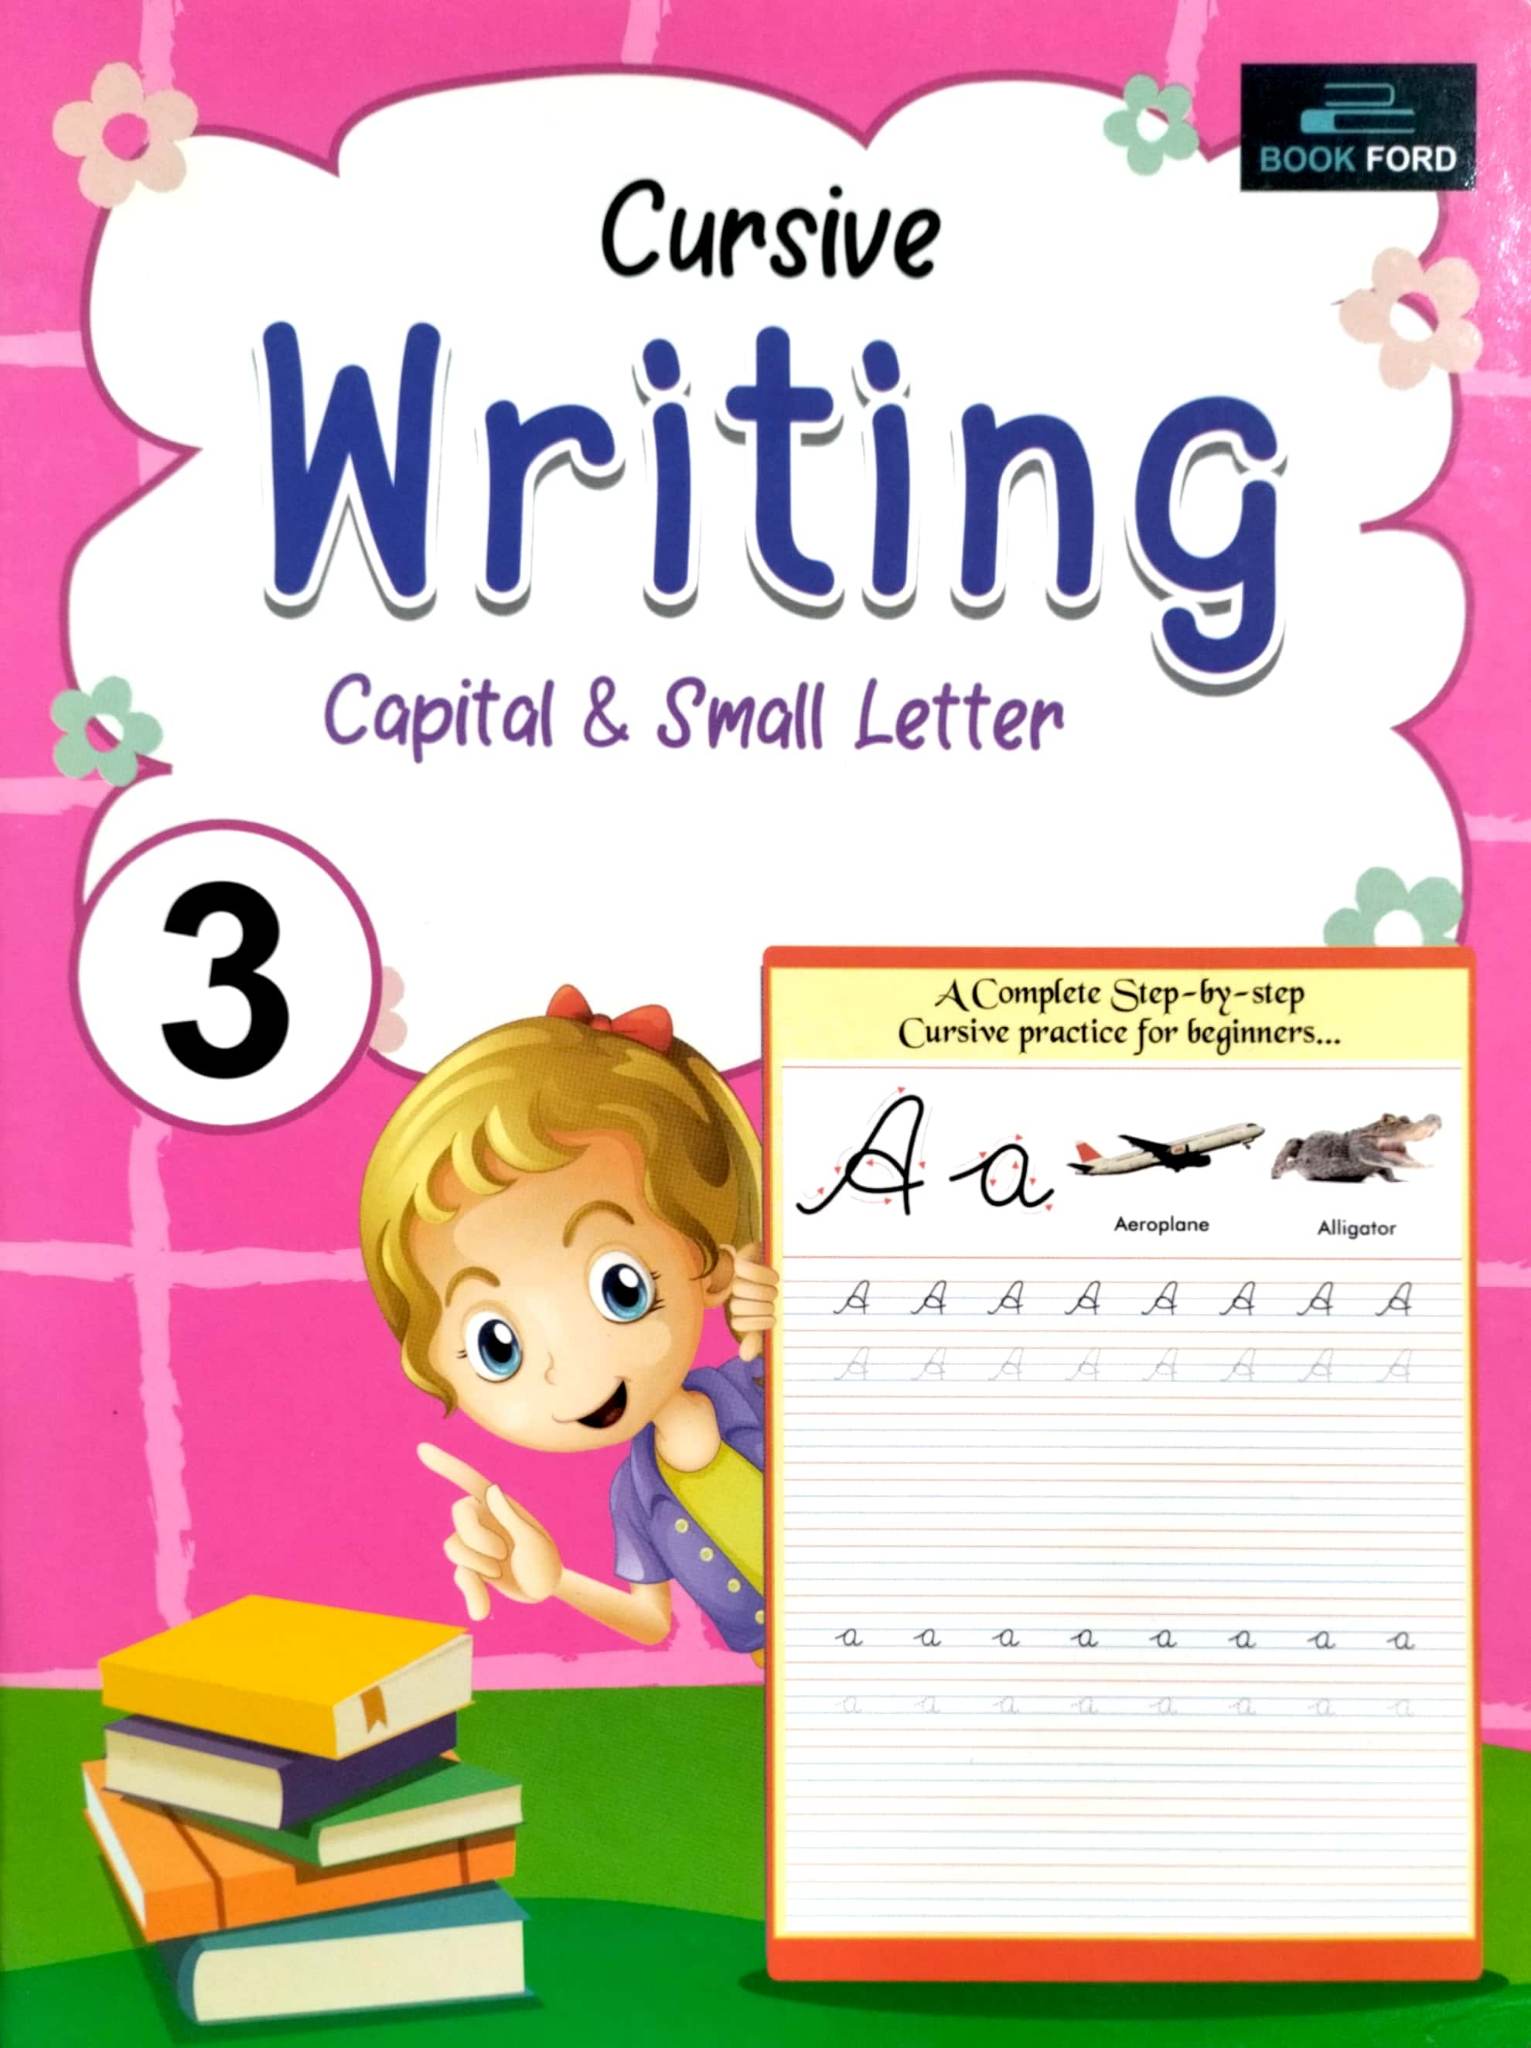 Cursive Writing Capital & Small Letter (পেপারব্যাক)